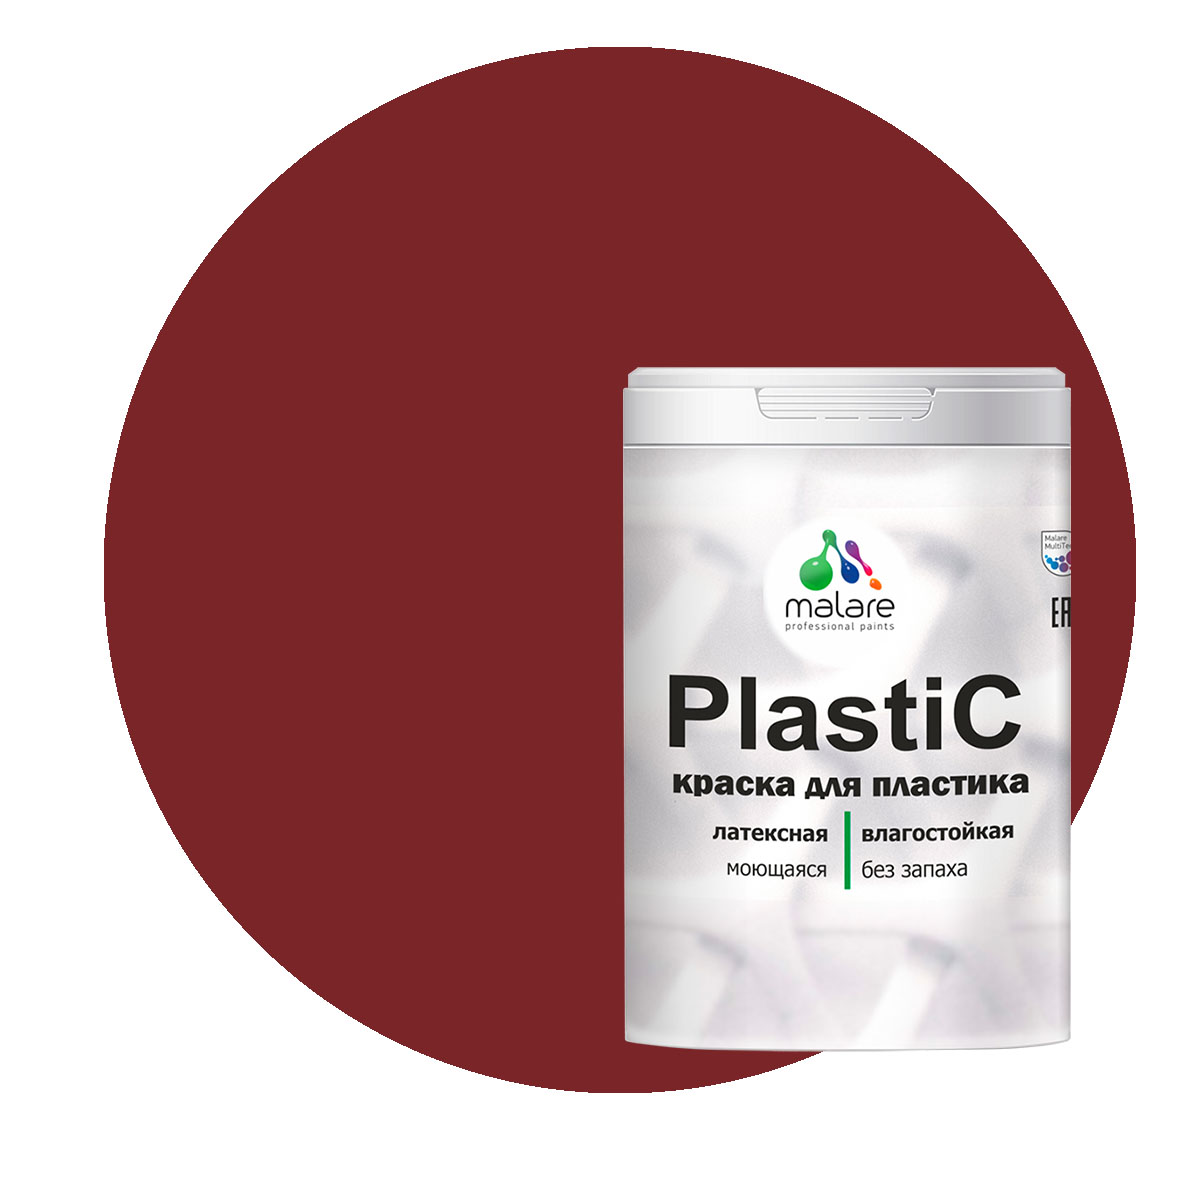 Краска Malare PlastiC для пластика, ПВХ, для сайдинга, багровый агат, 2 кг.